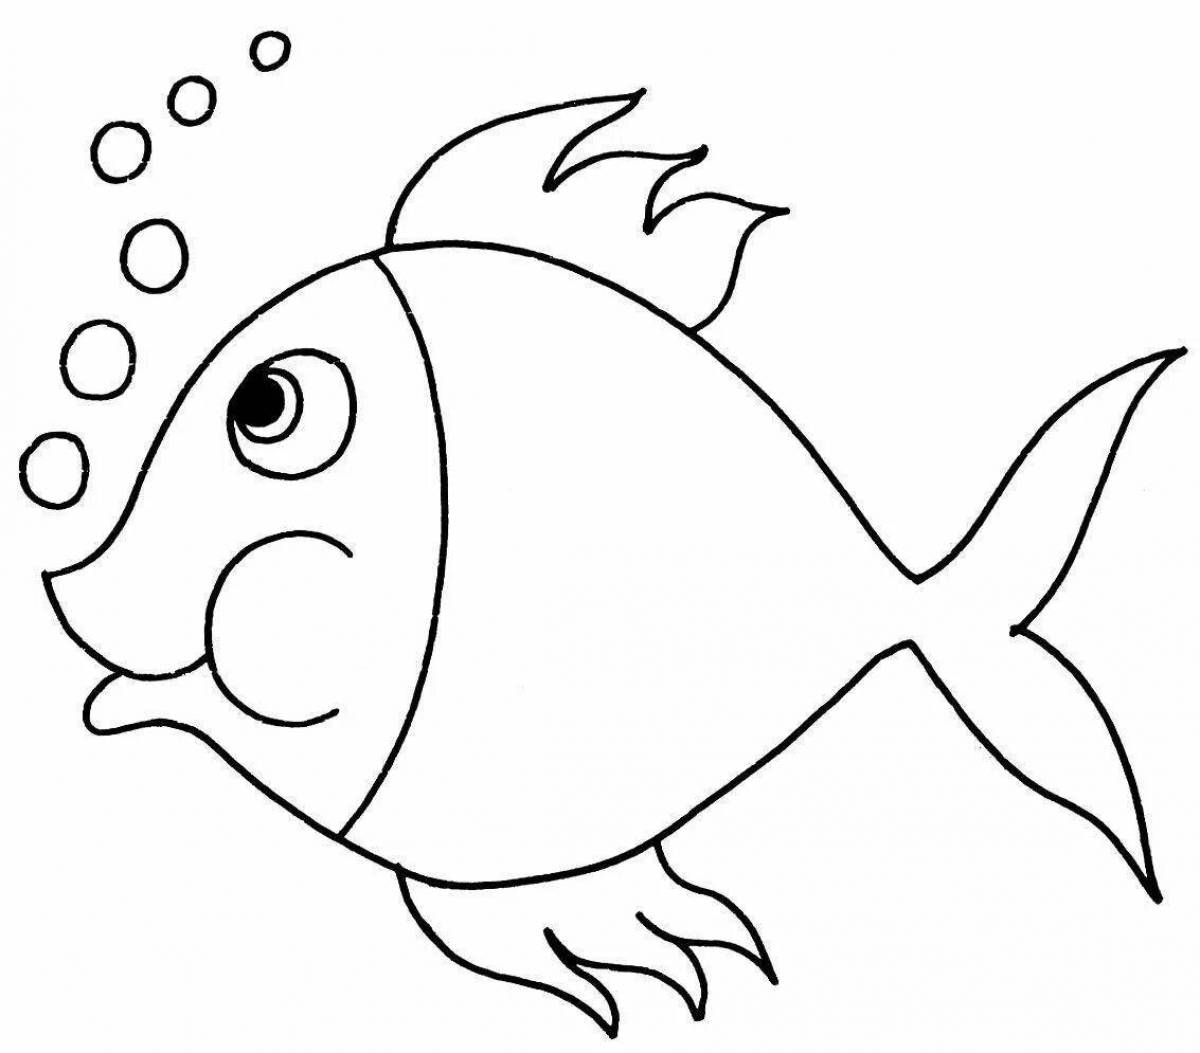 Веселая простая рыбка-раскраска